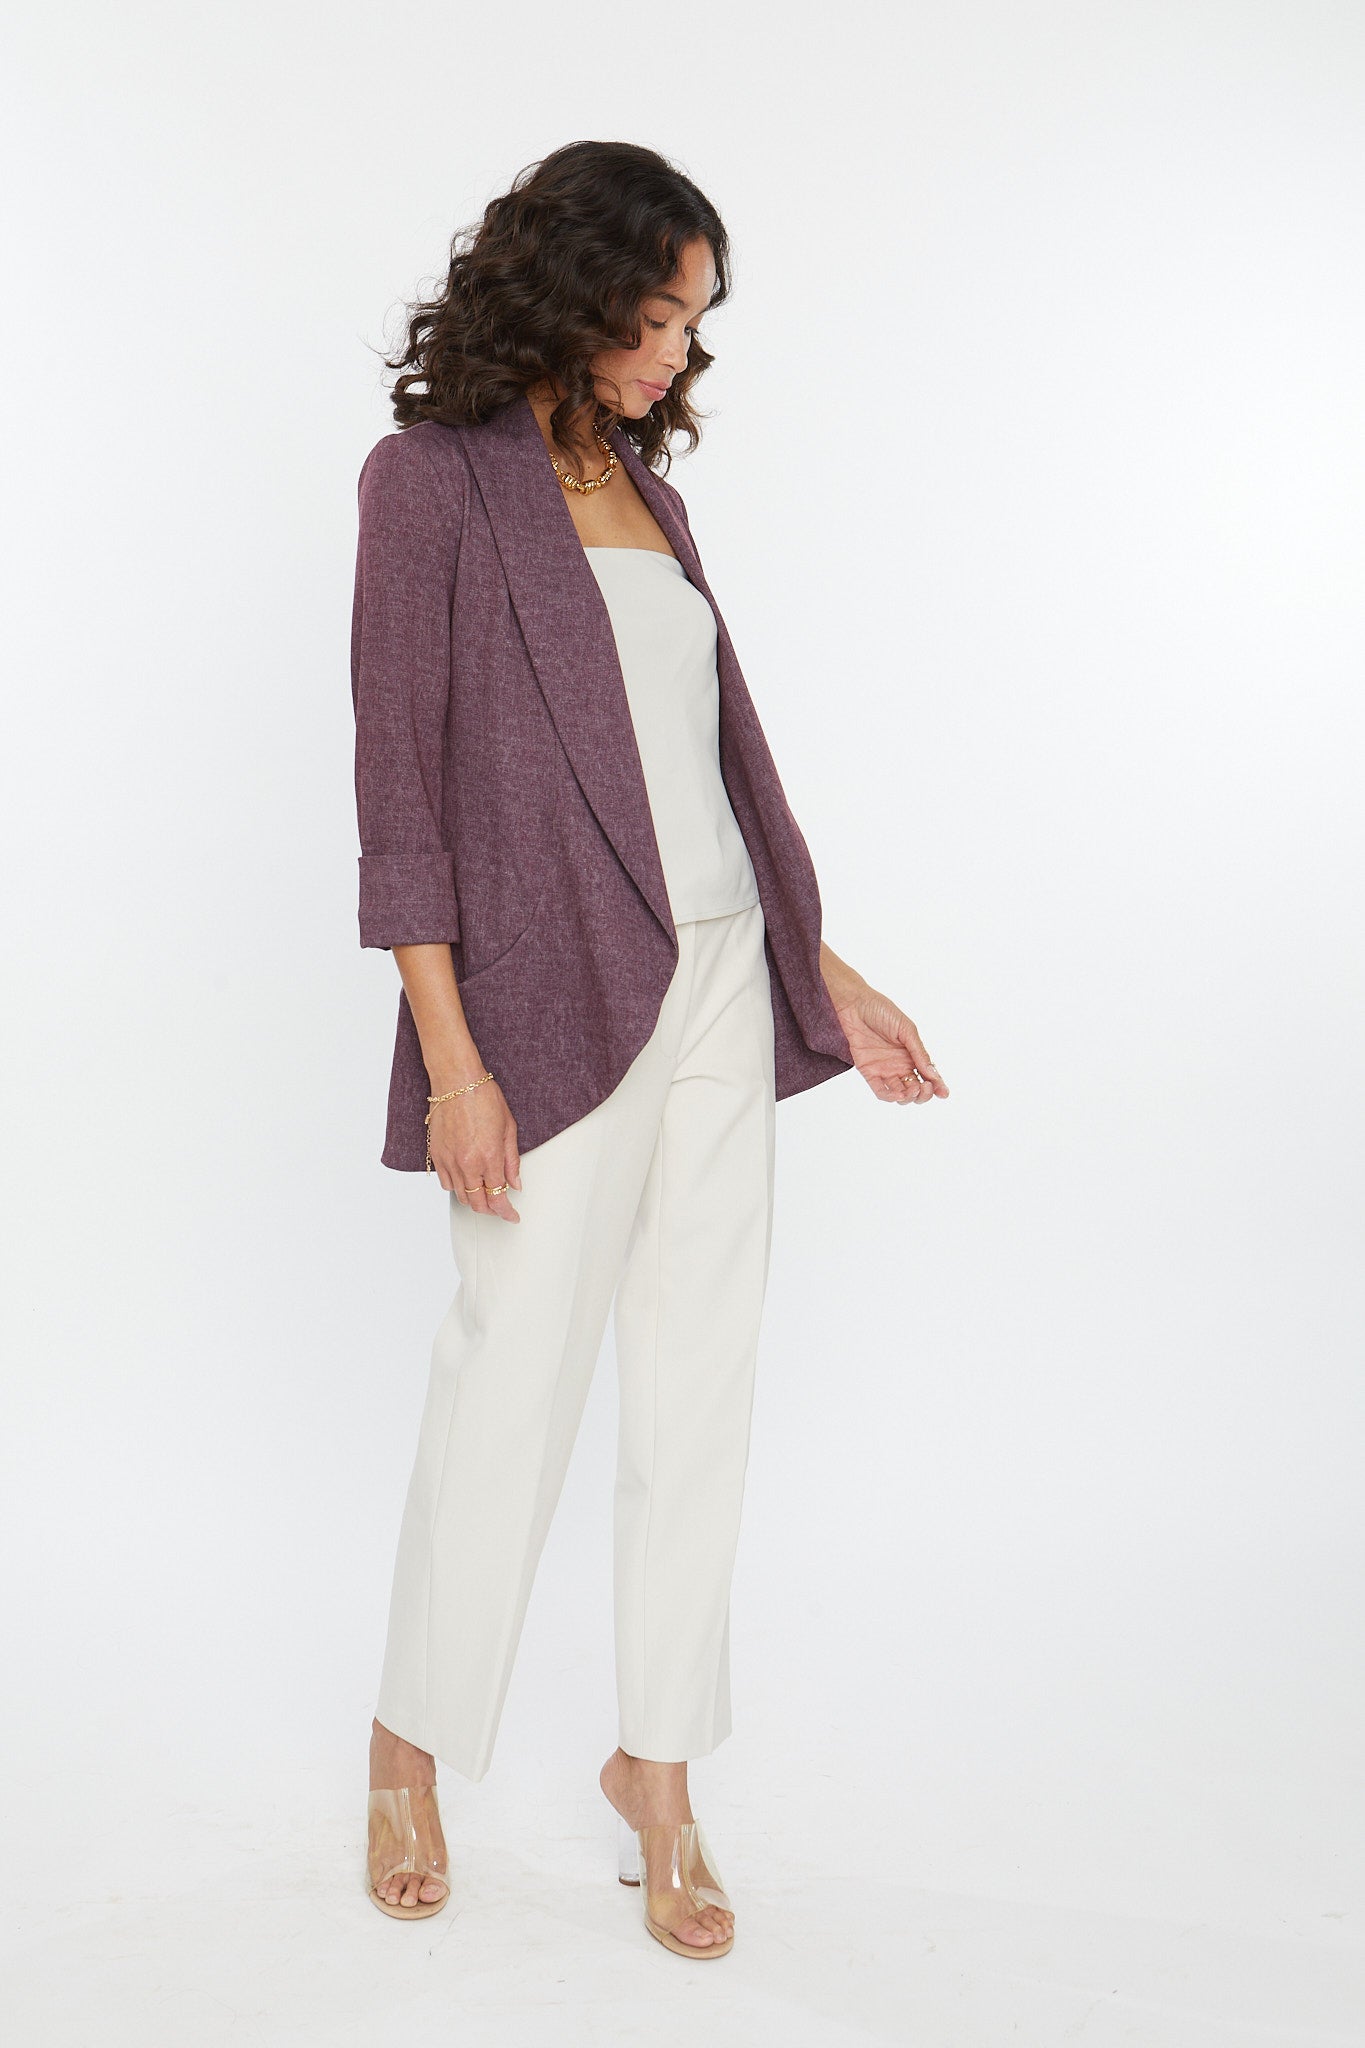 Melanie knit jacket in denim finish, washed plum denim color, open front jacket, shawl collar, 3/4 length sleeve